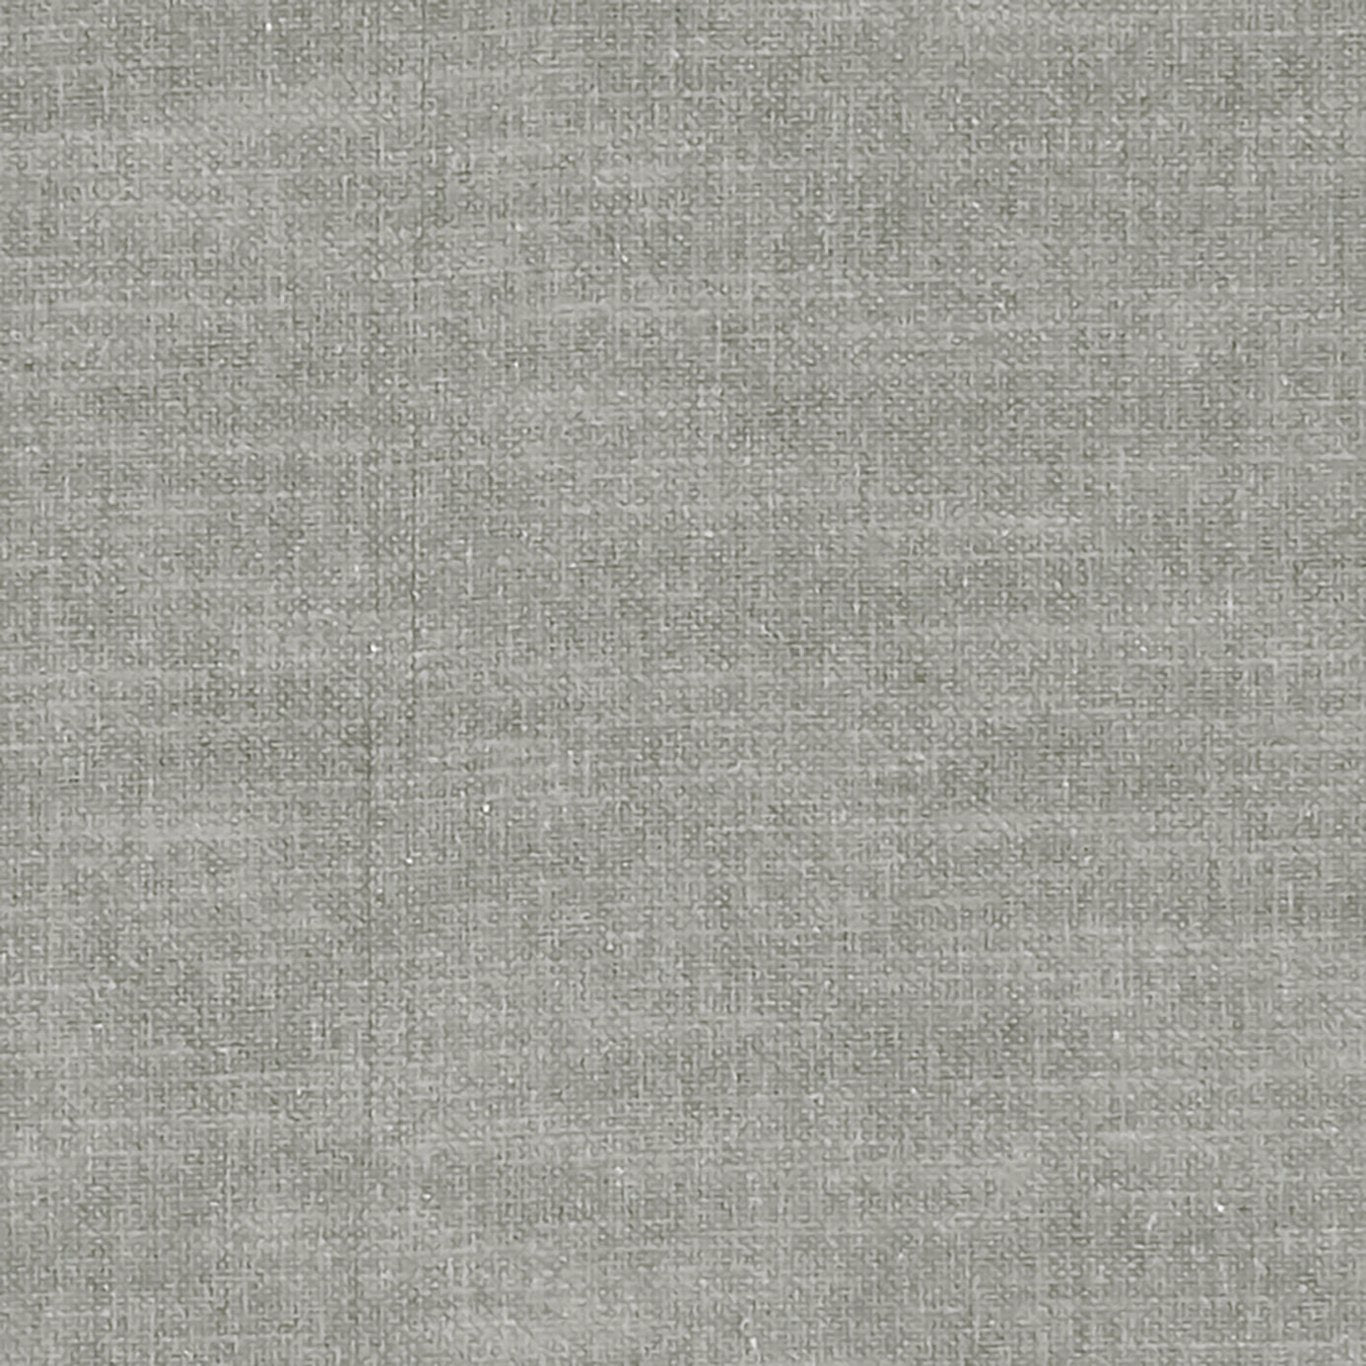 Amalfi Fabric by Clarke & Clarke - F1239/04 - Ash